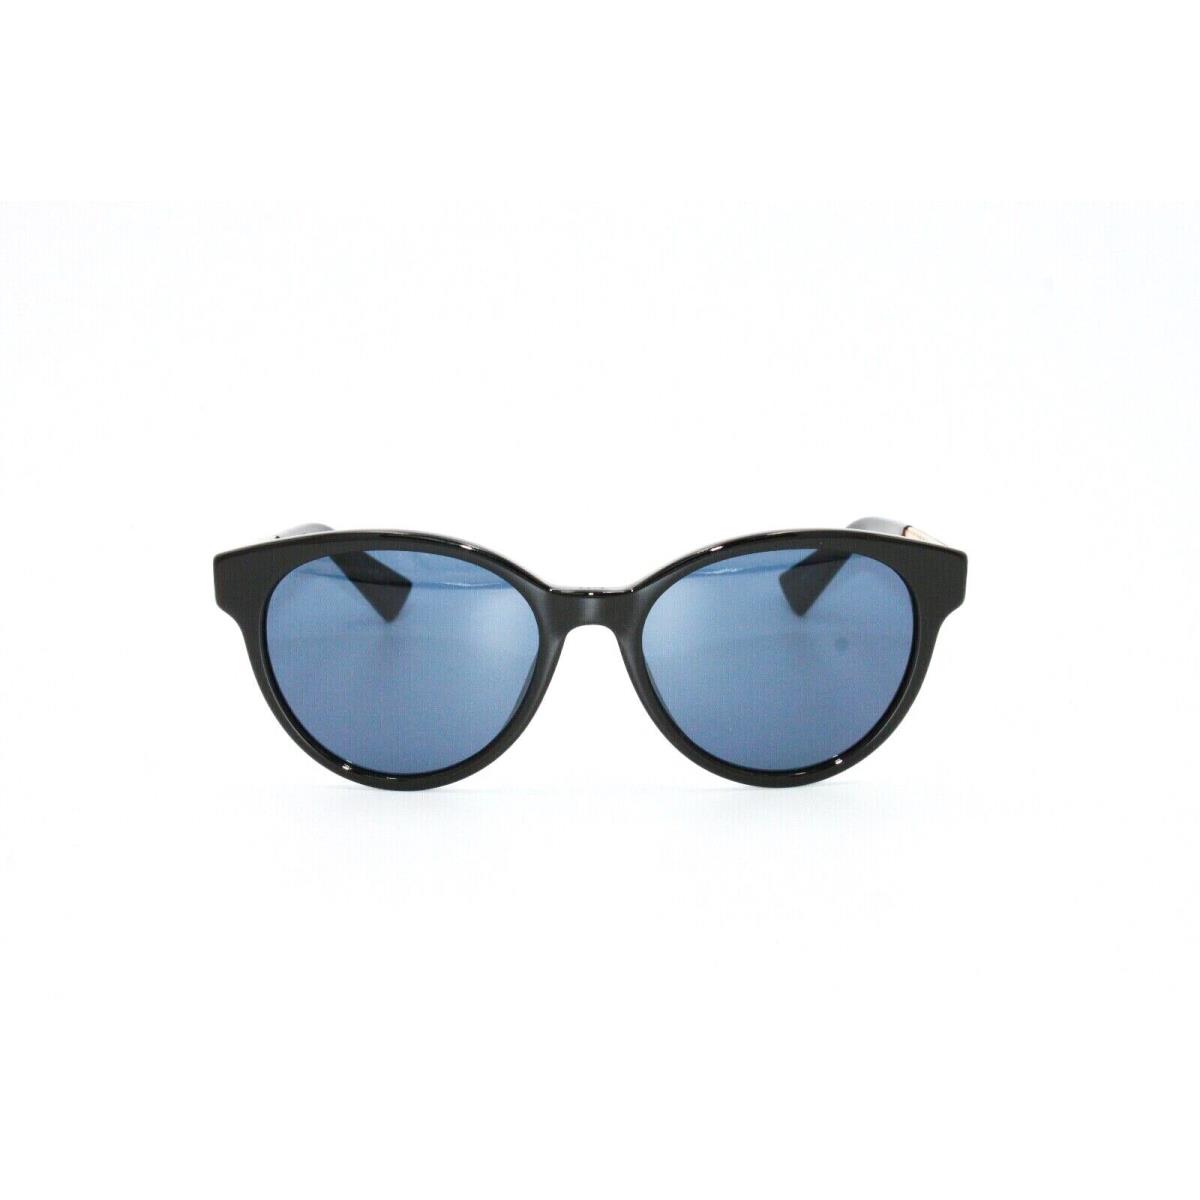 Christian Dior Sunglasses Diorama7 26SKU 52-18 145 WF107BQBBF Made in Italy - Gold Frame, Blue Lens